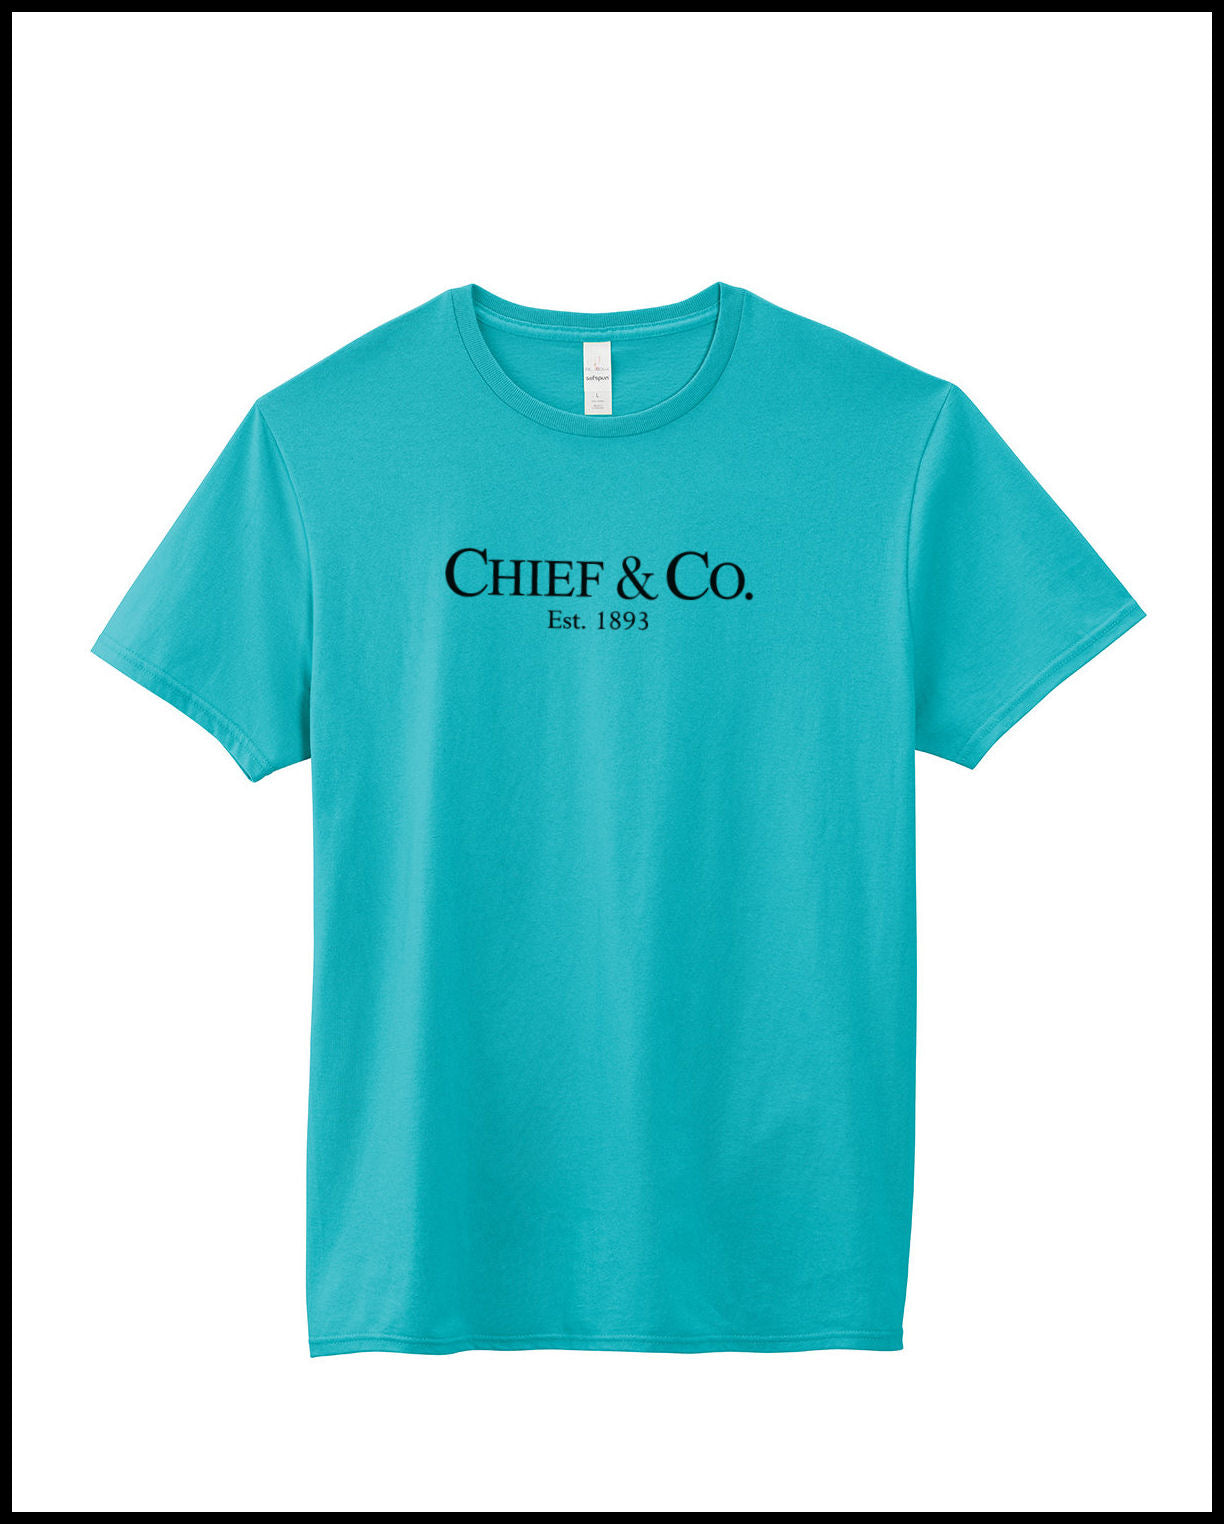 Chief & Company Tahiti Blue & Black T-Shirt